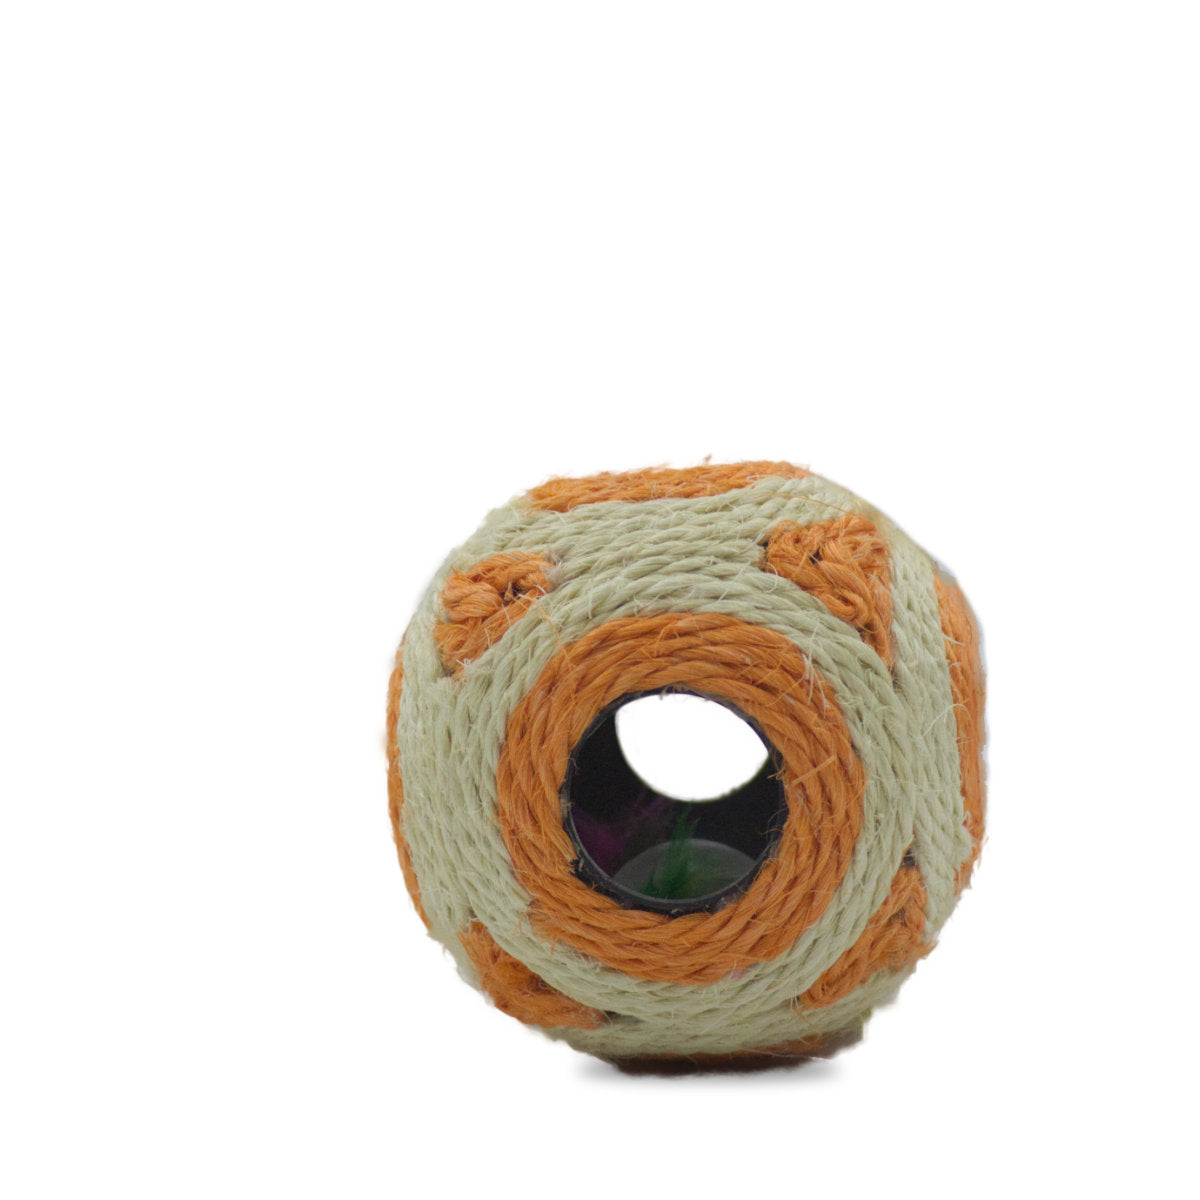 orange cat balls made of sisal rope, best cat toys